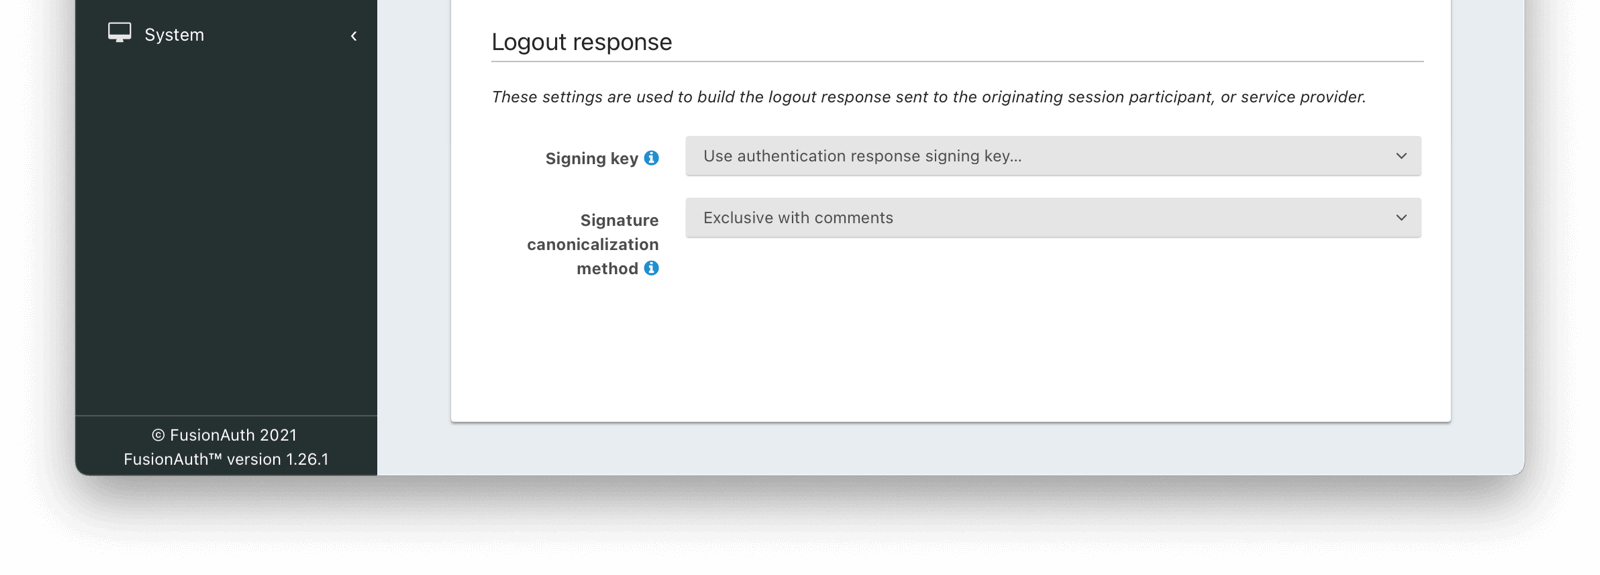 Application SAML logout response settings